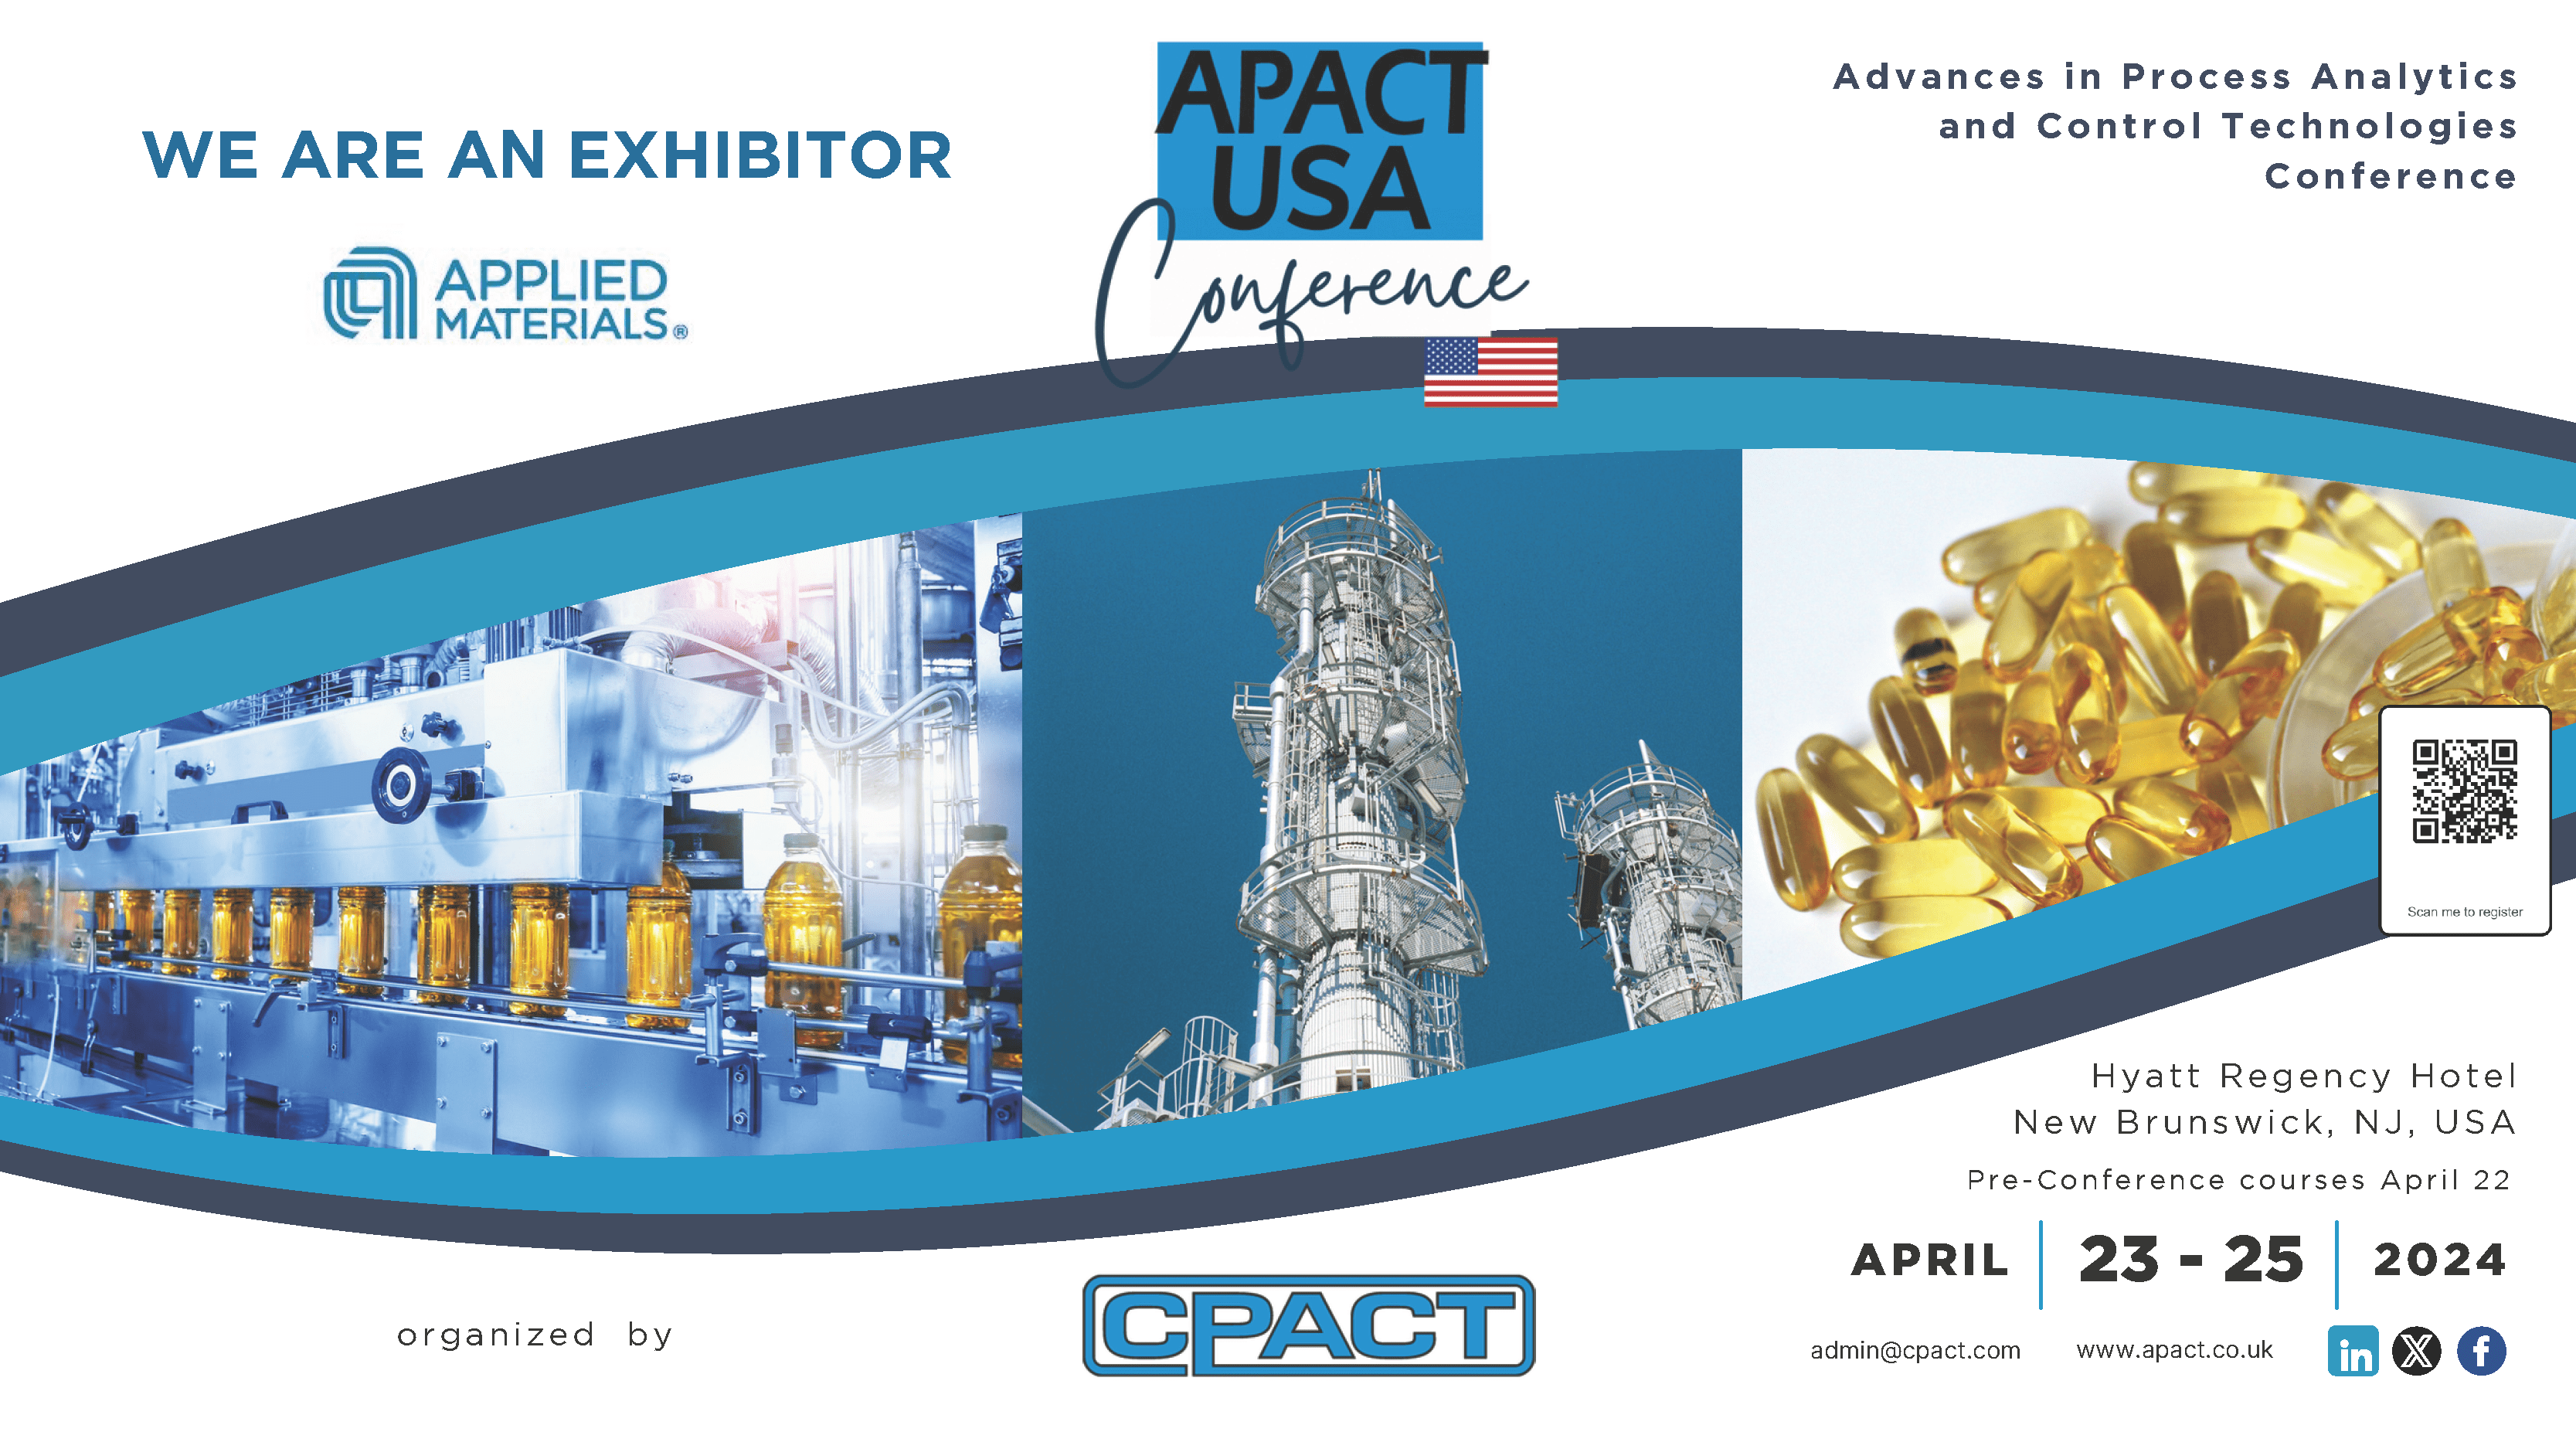 Join us at the inaugural APACT USA Conference, April 23-25, in New Brunswick, NJ